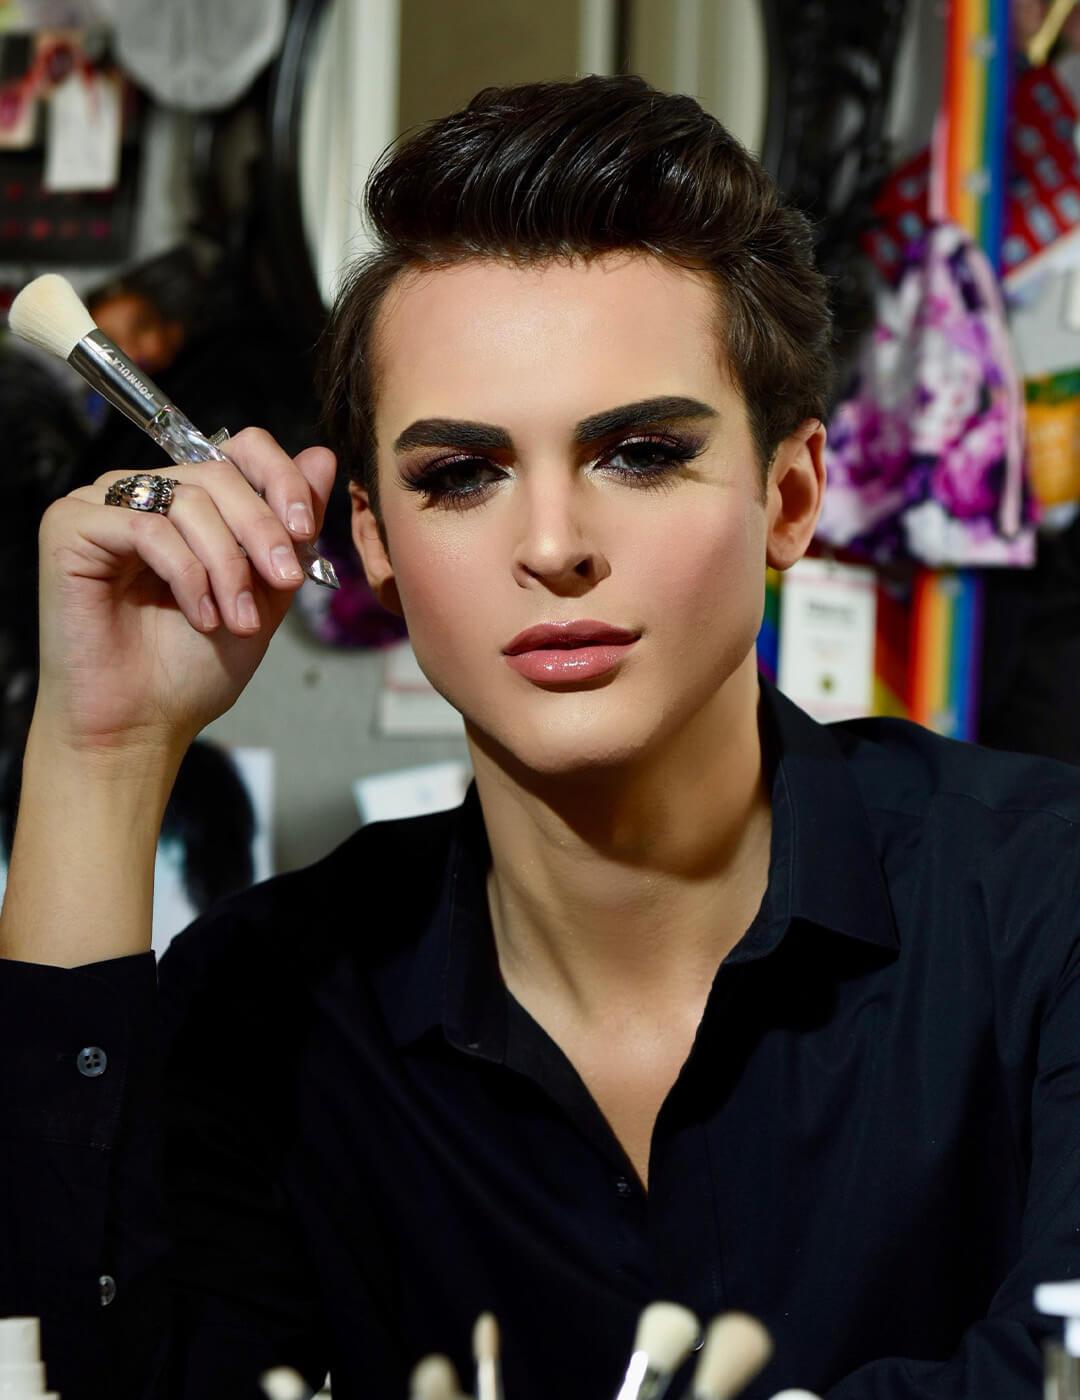 Portrait of Zach Dishinger holding a makeup brush